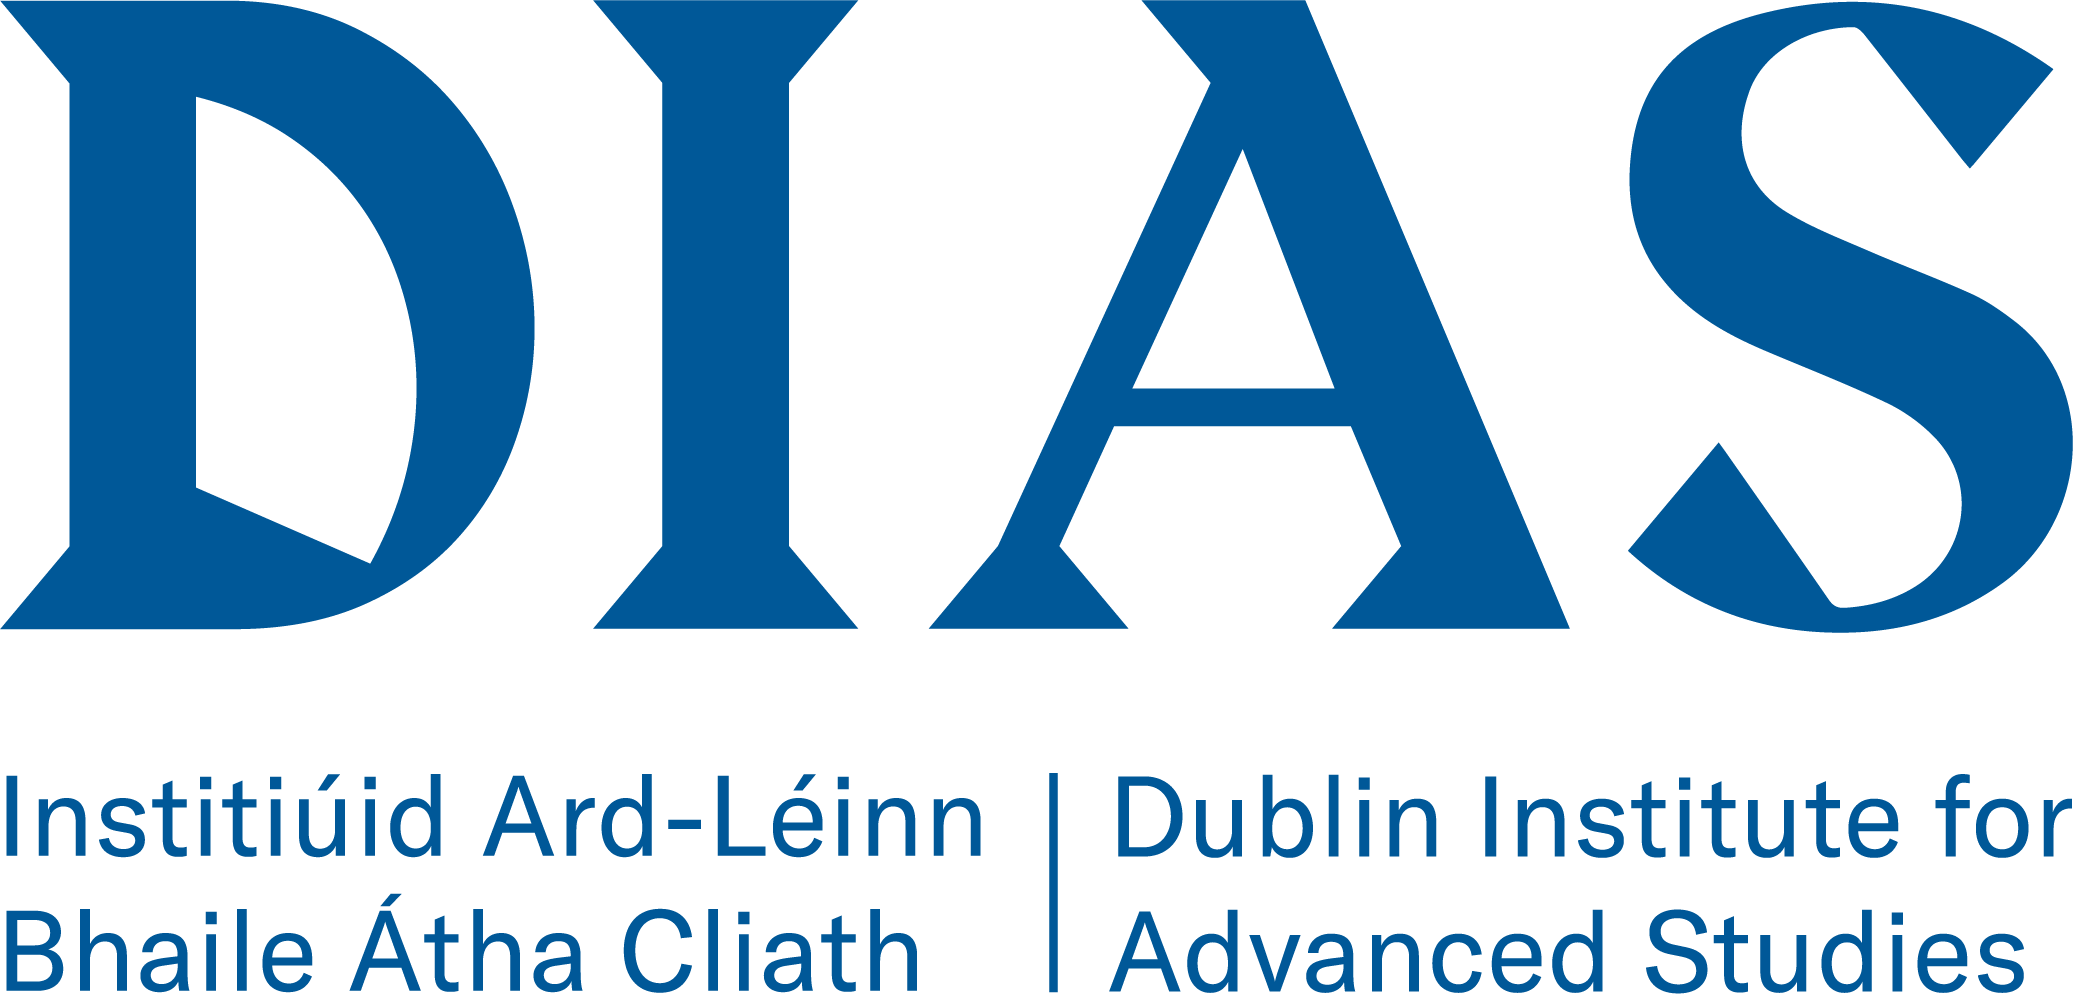 Logo of the Dublin Institute for Advanced Studies (DIAS)